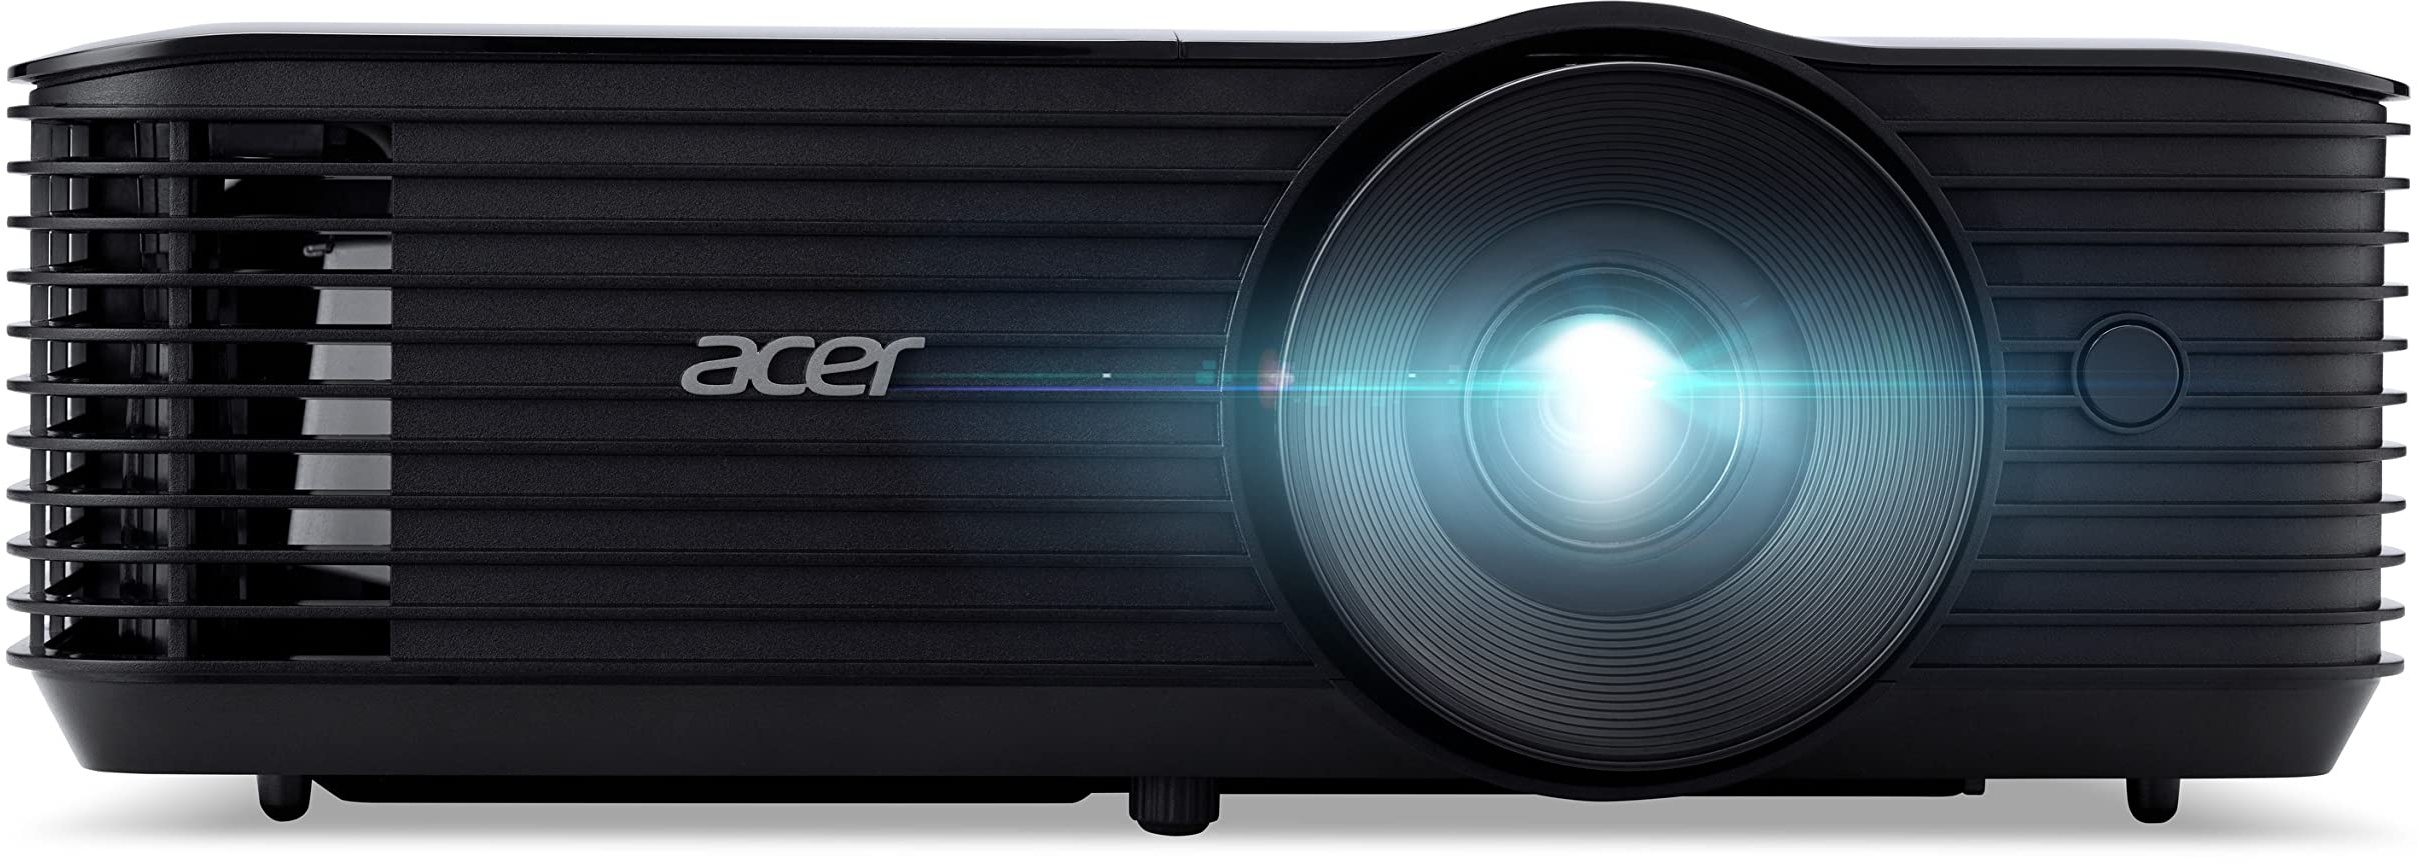 Acer X1128H DLP Beamer (SVGA (800 x 600 Pixel) 4.800 ANSI Lumen, 20.000:1 Kontrast, 3D, Keystone, 1x 3 Watt Lautsprecher,) schwarz, Home Cinema/Business